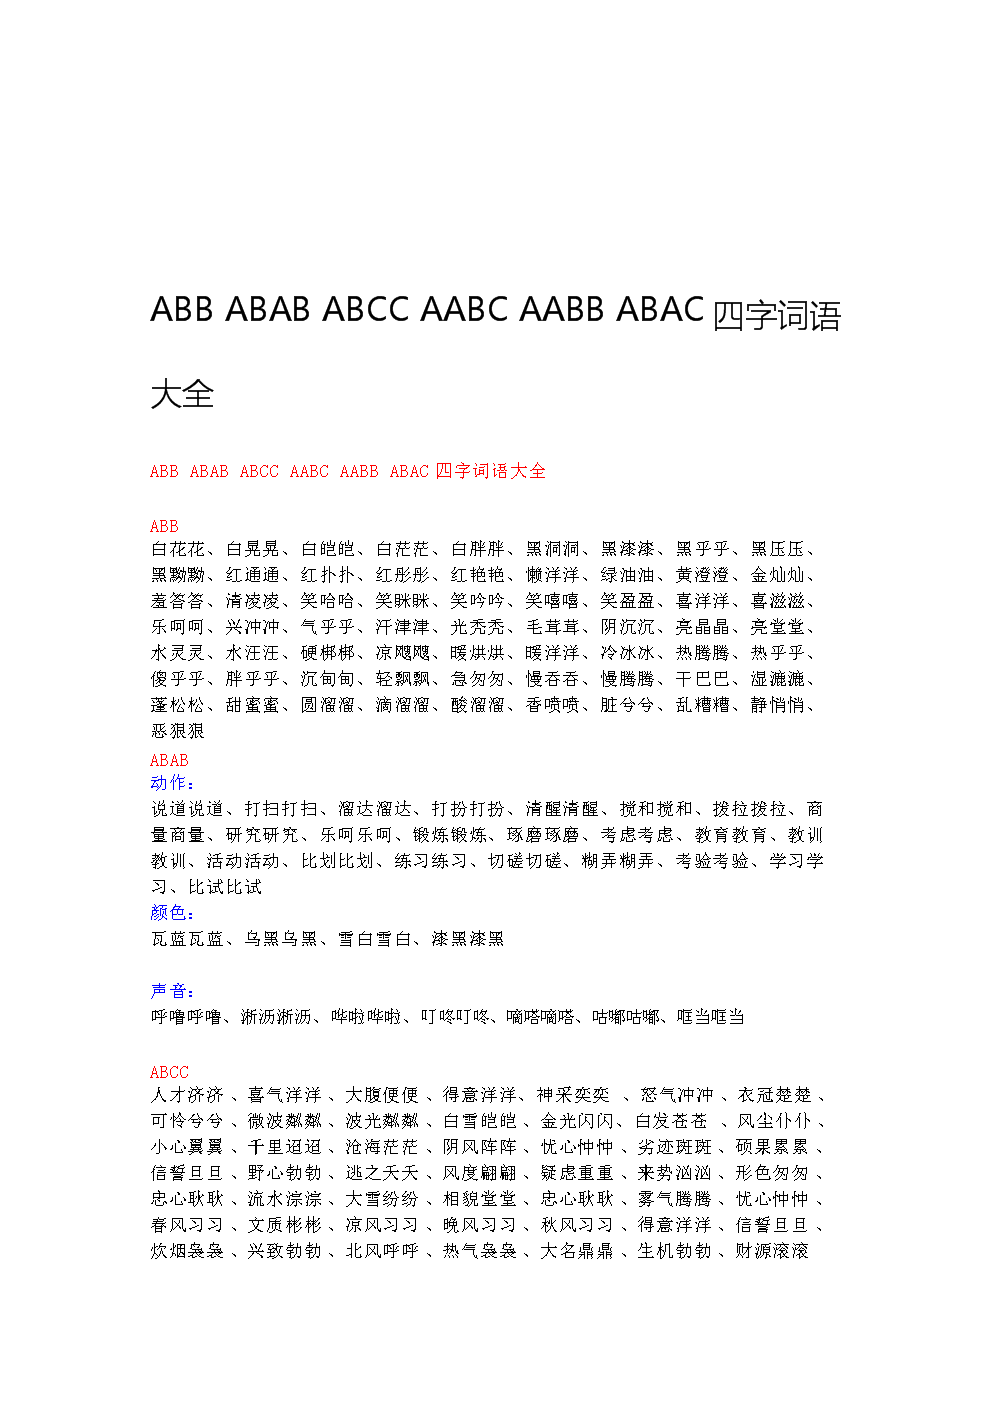 abcc的四字词语大全